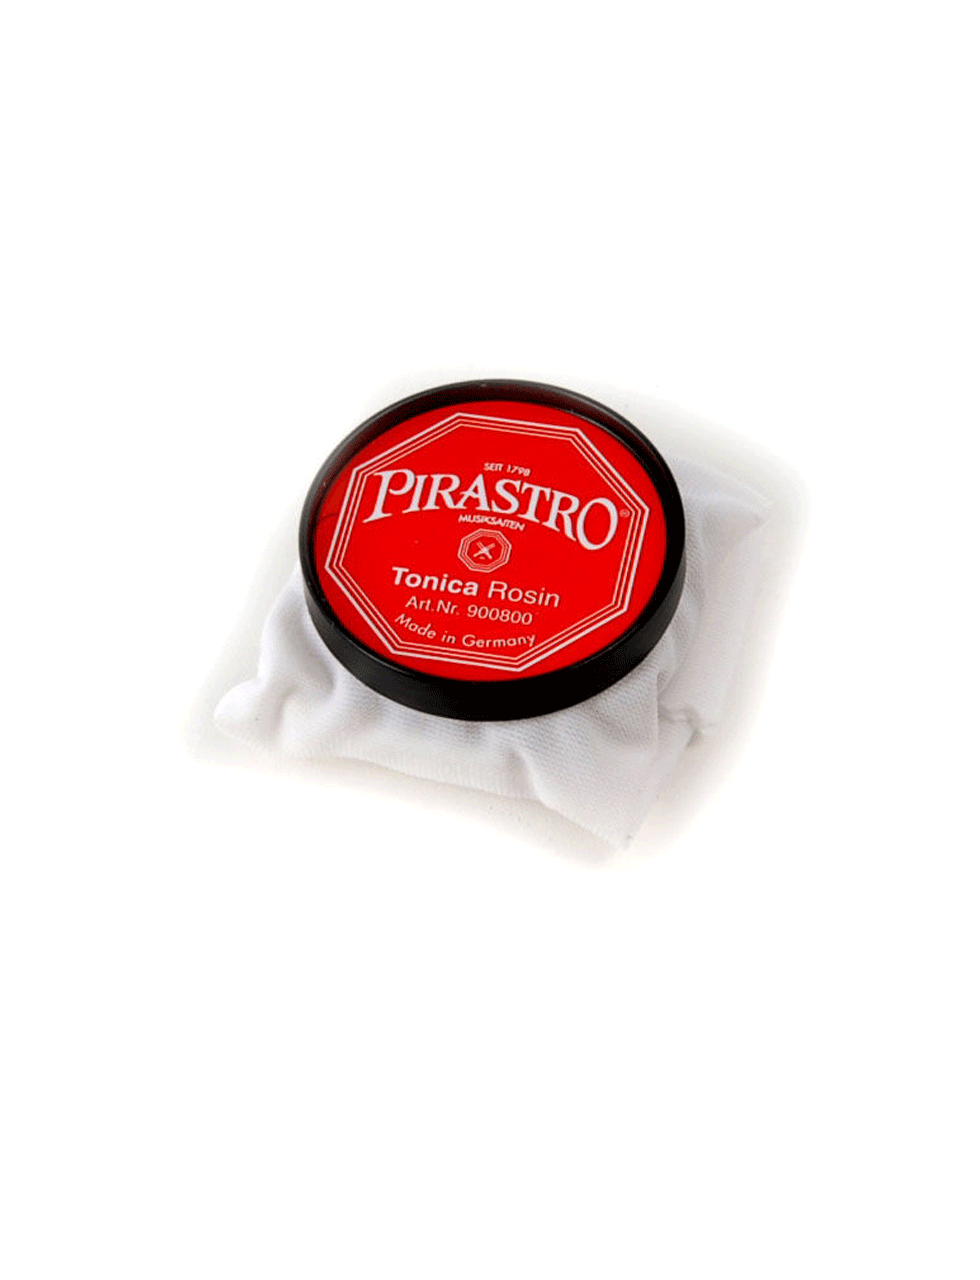 Pirastro-Tonica-Rosin-400850_800.png